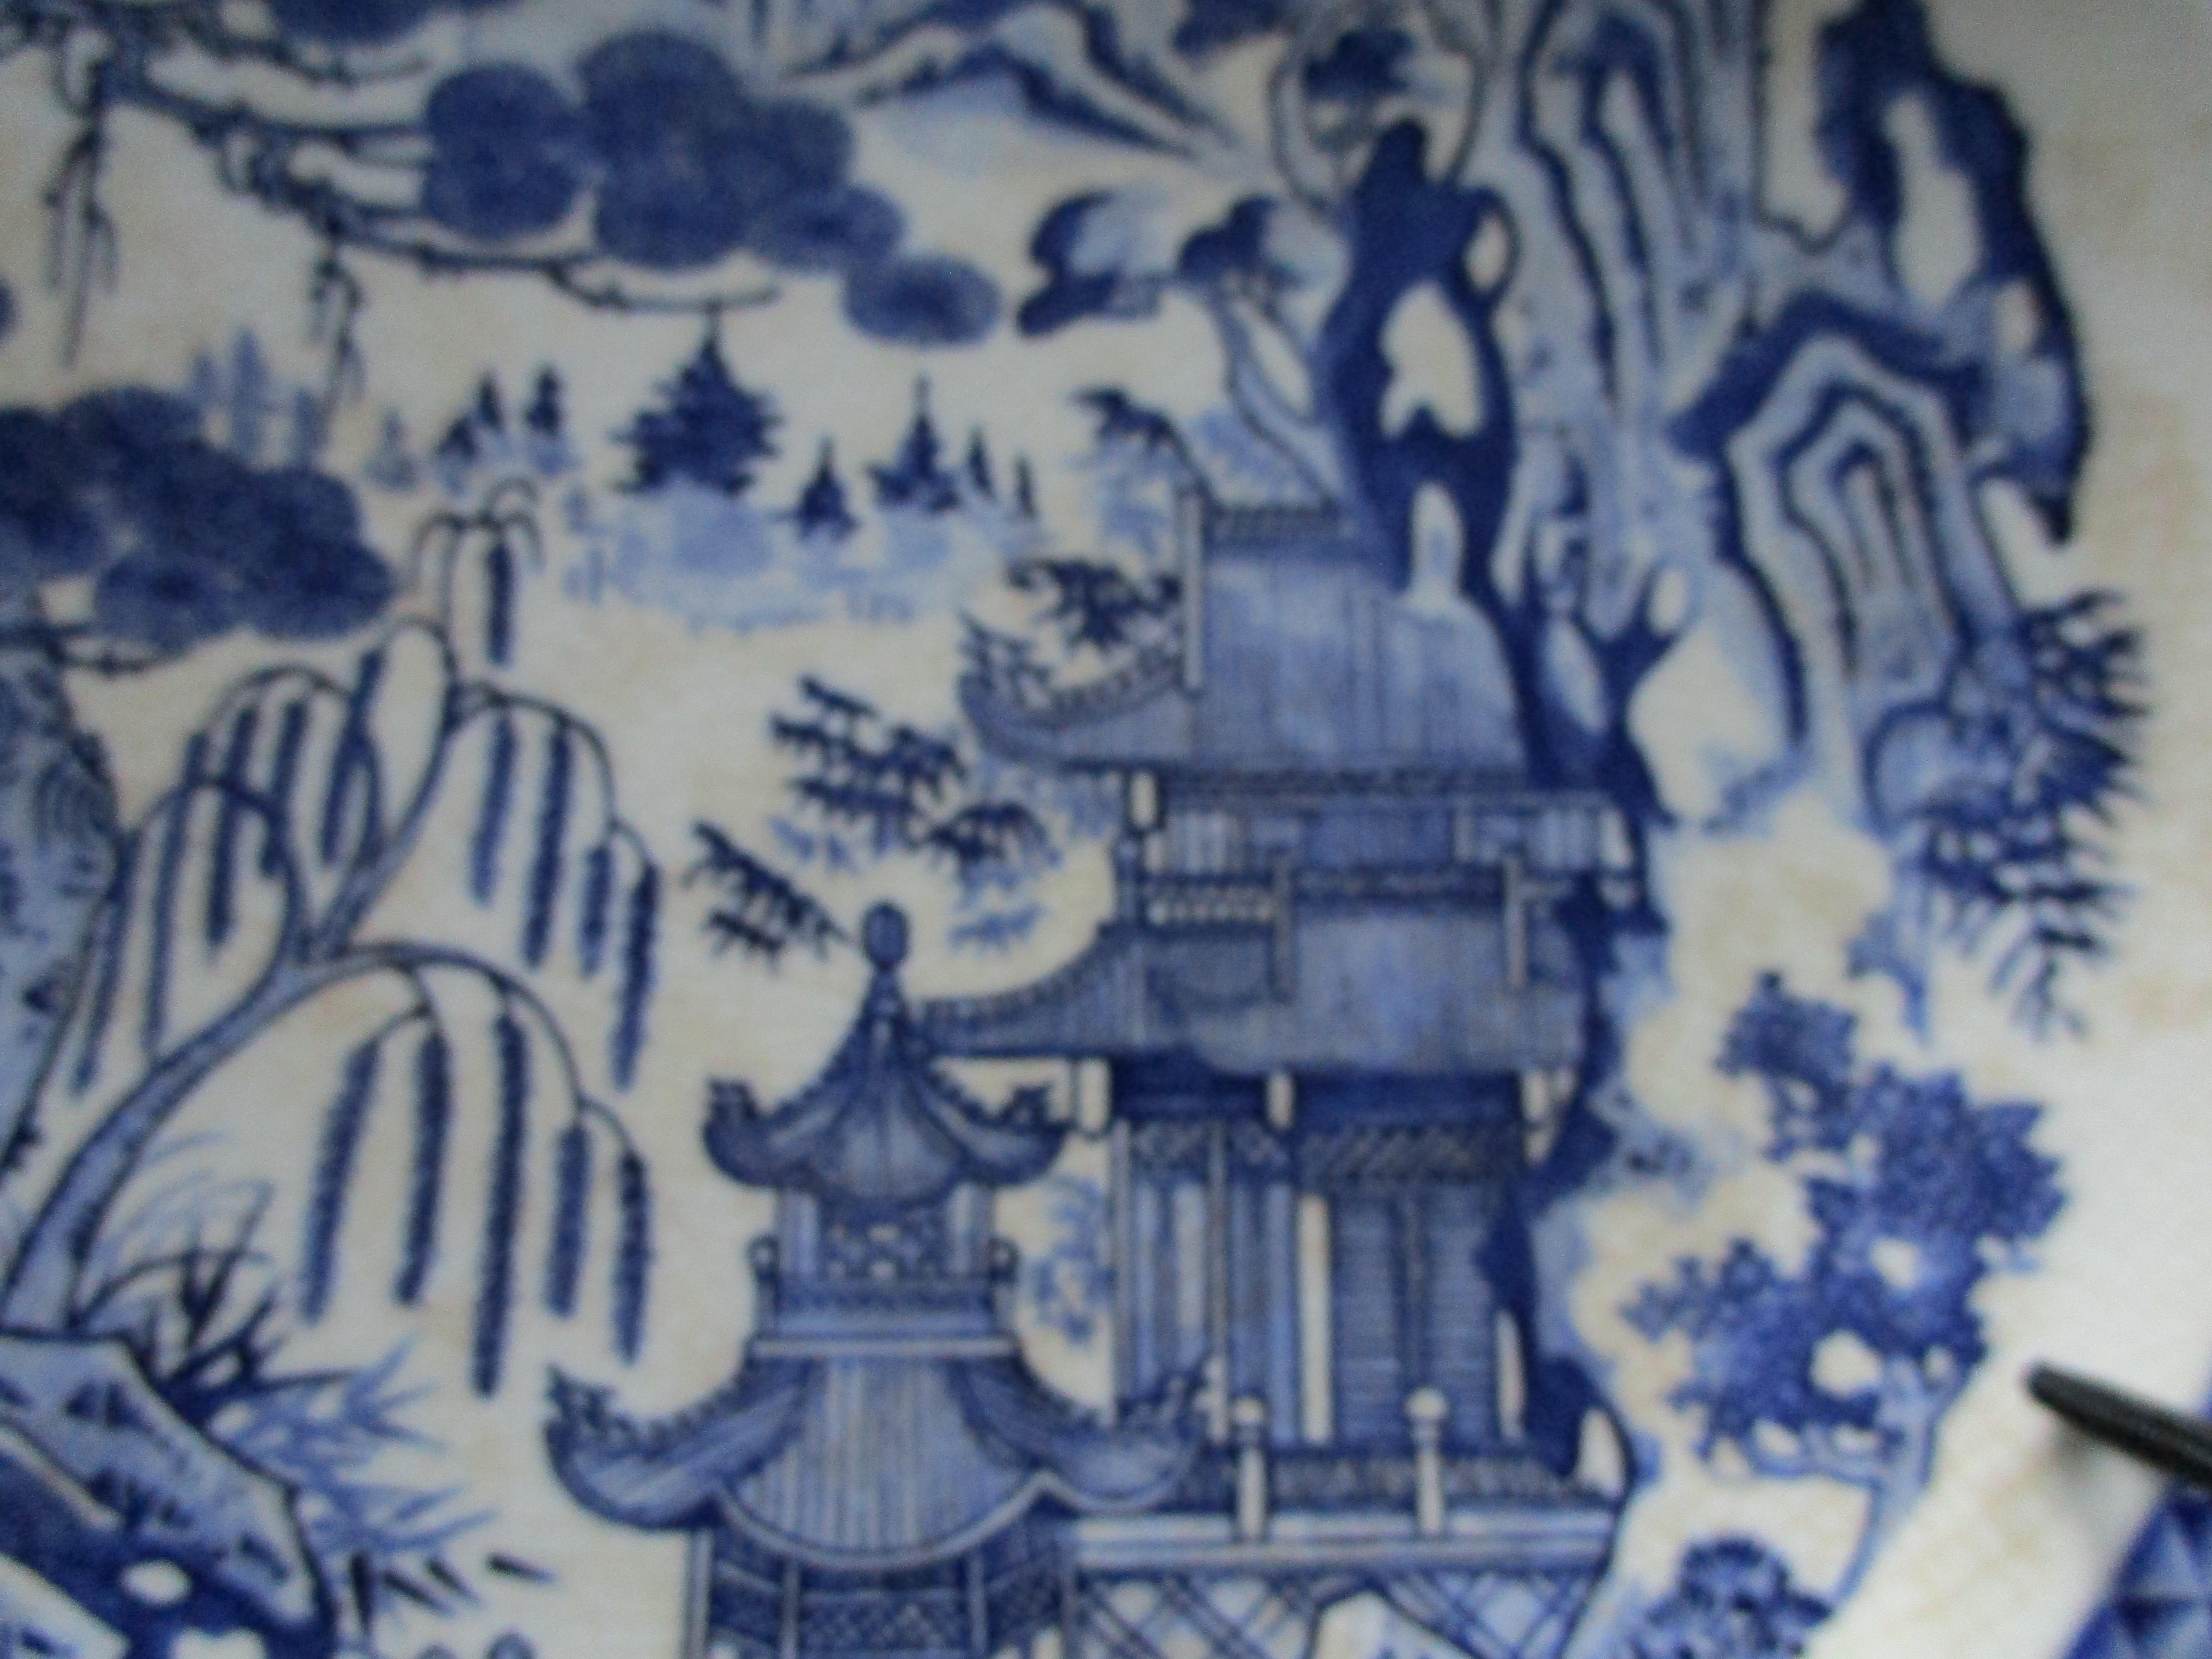 Esportazione cinese Caricatore da esportazione cinese in porcellana blu e bianca con montagne e pagoda in vendita